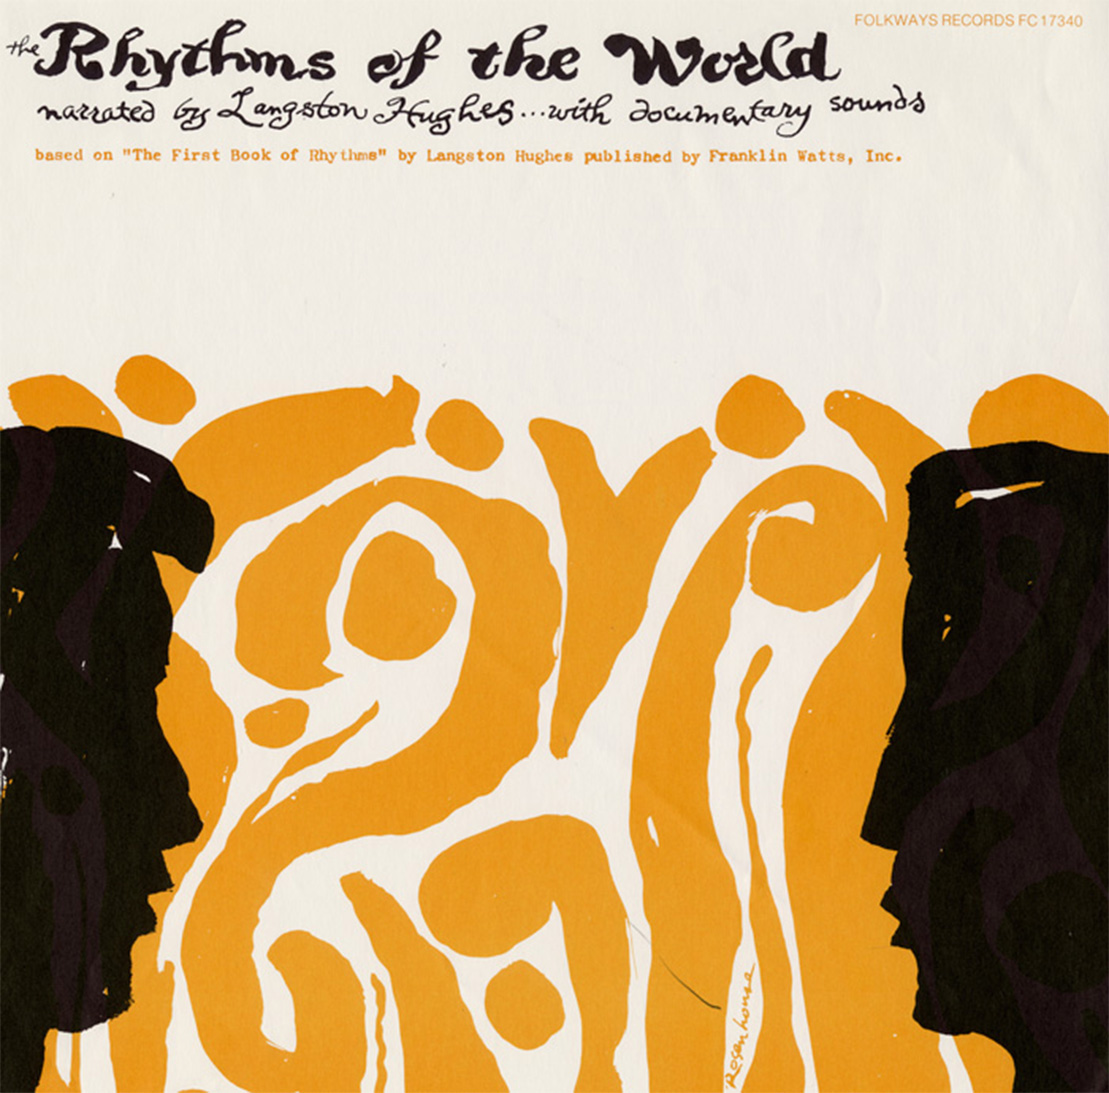 Langston Hughes' Rhythms of the World album cover